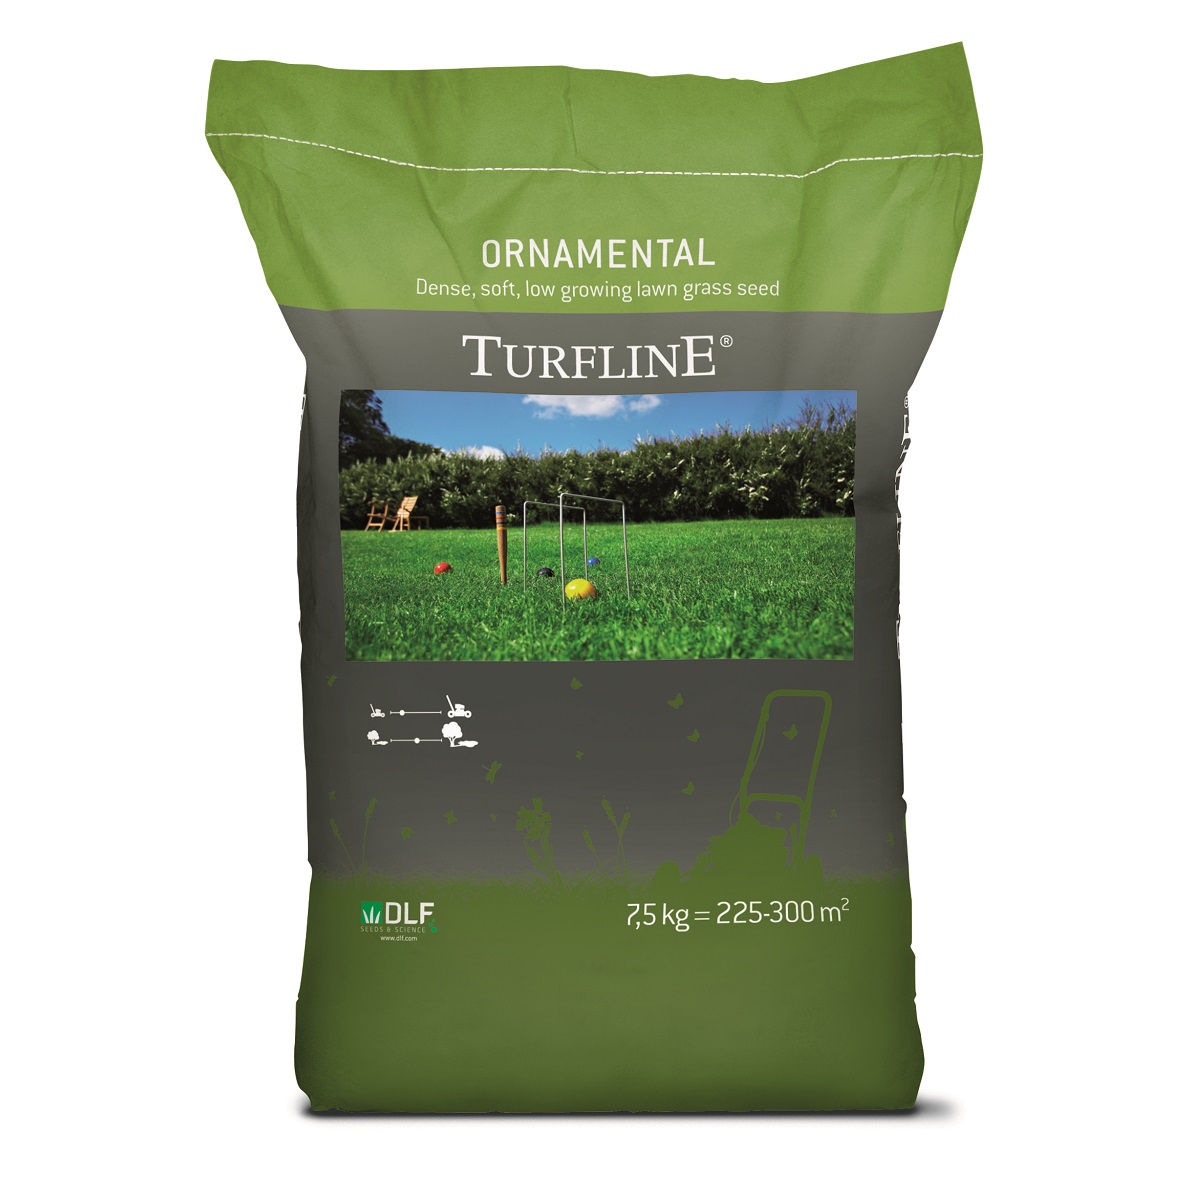 Газонная трава Dlf-Trifolium Turfline Ornamental (Орнаментал) / 7,5 кг